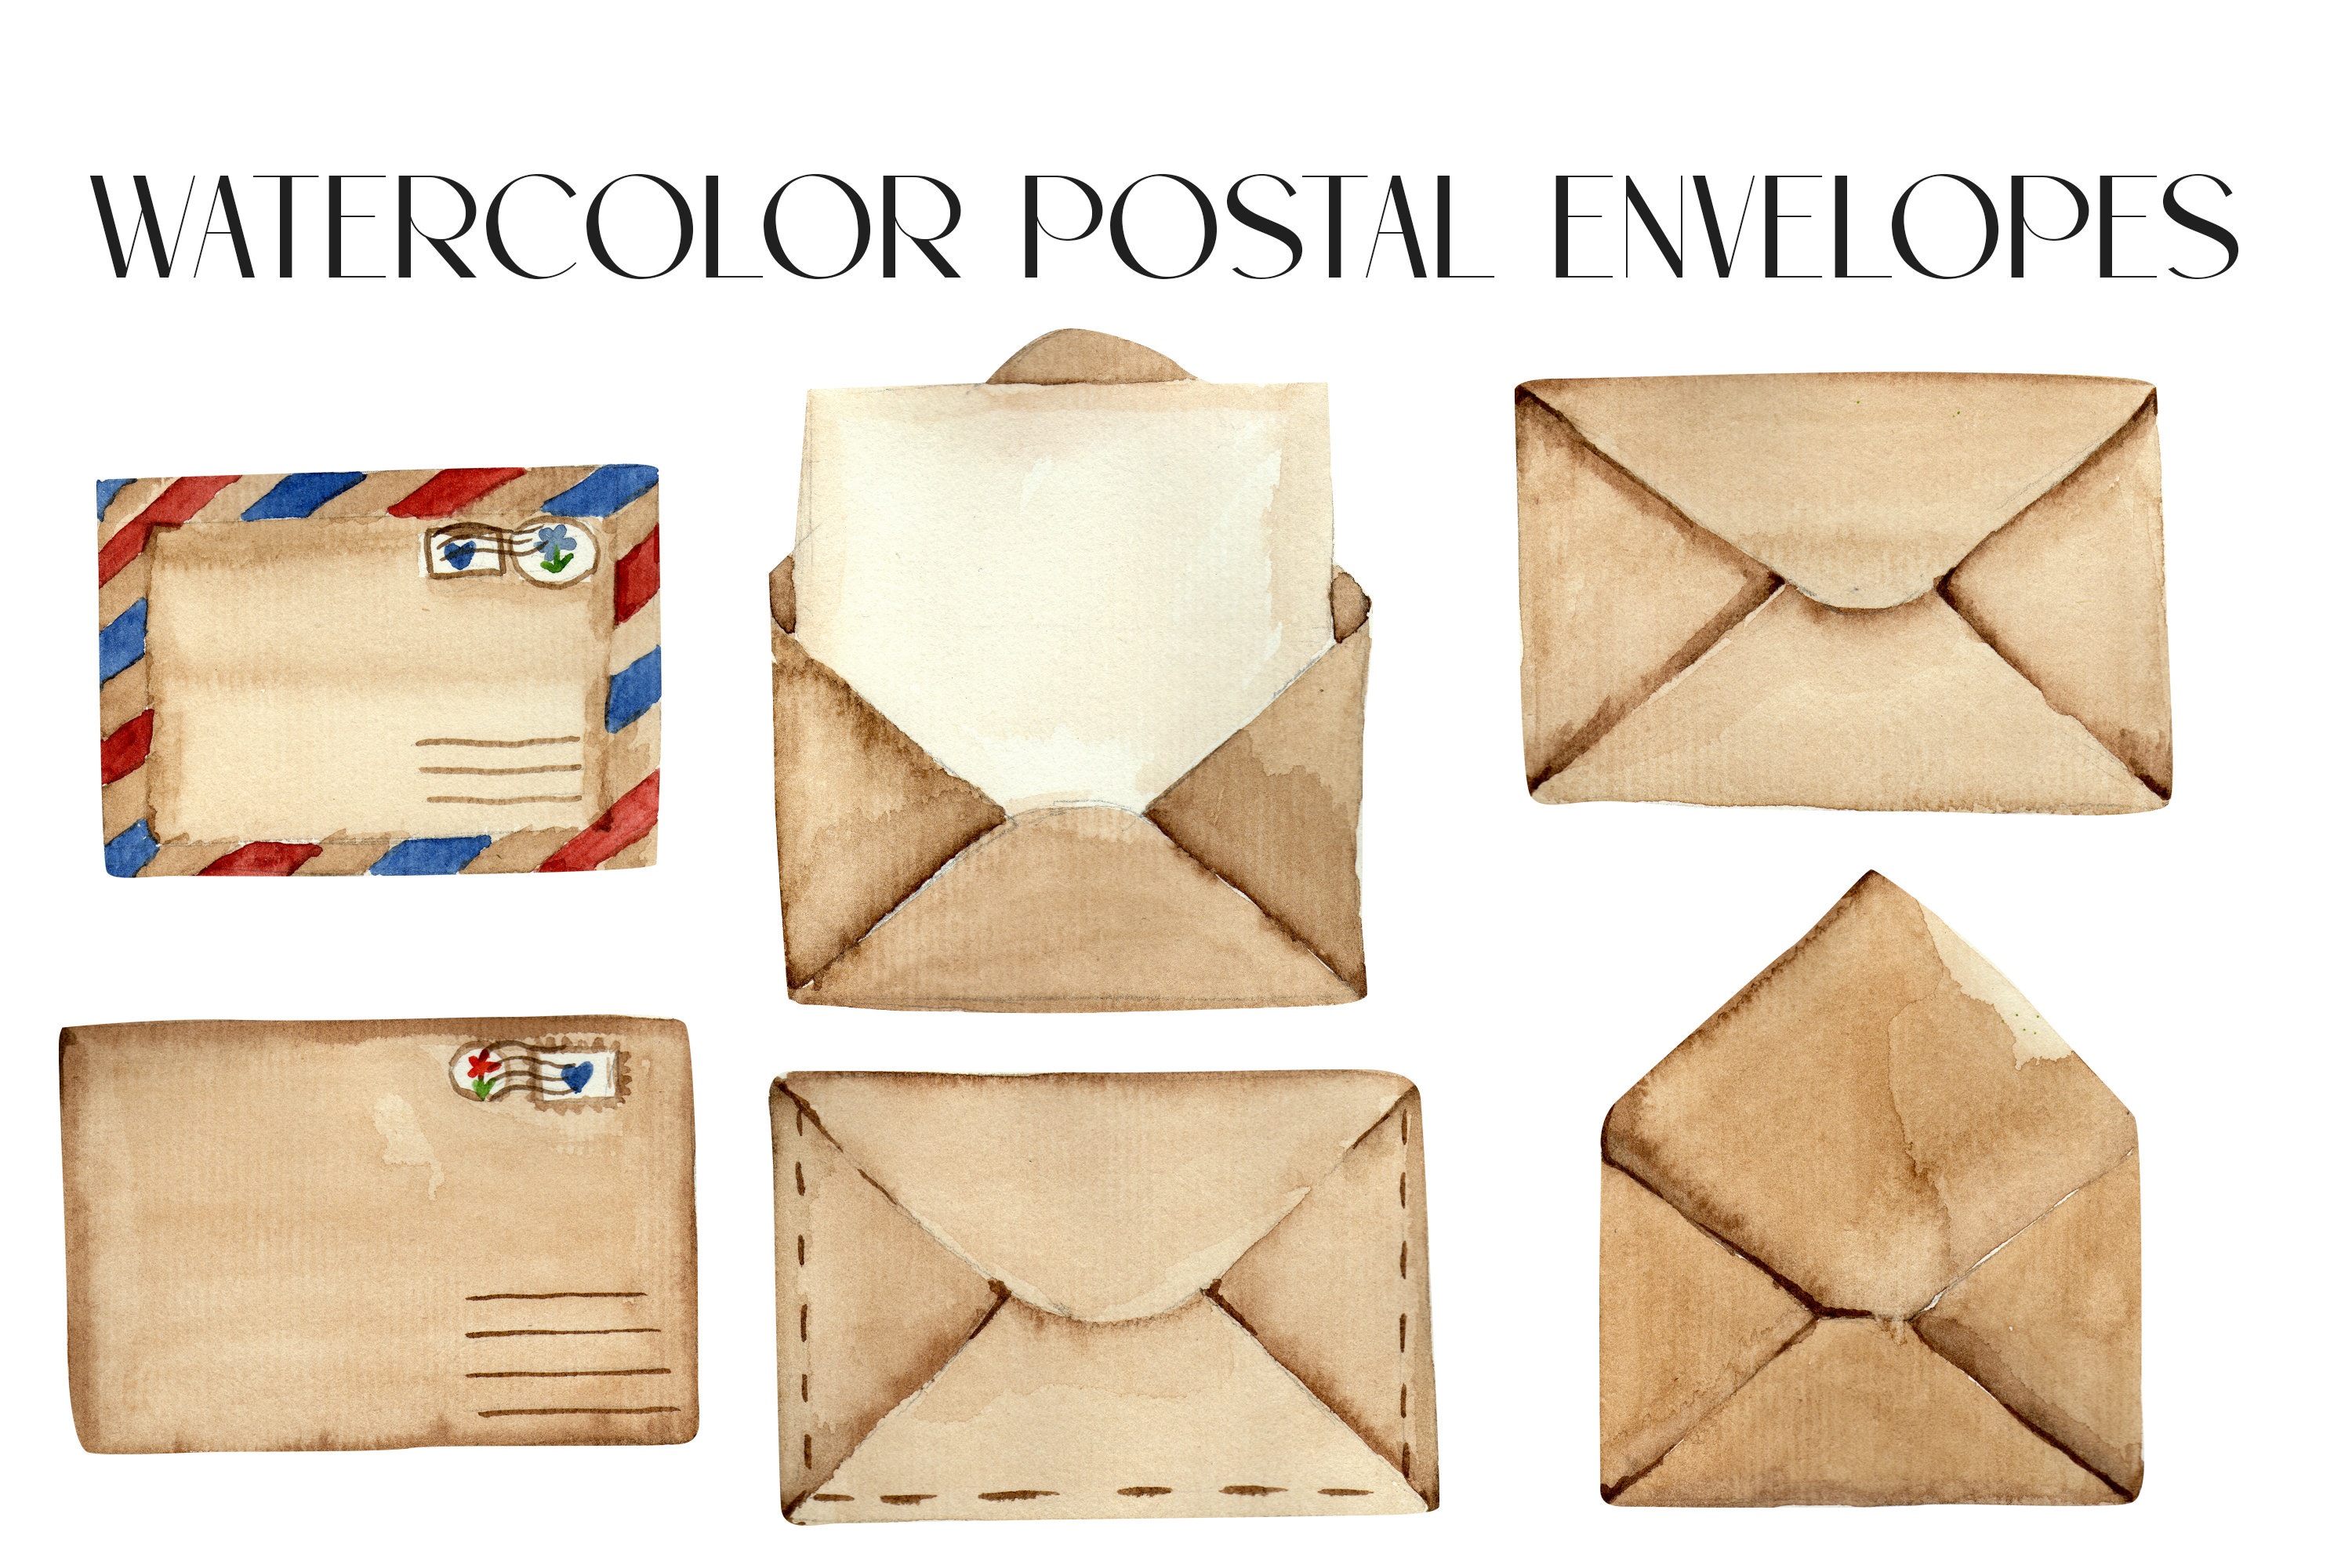 Blank Greeting Cards with Envelopes, Watercolor Sea Ocean (4x6 In, 48  Pack), PACK - Kroger